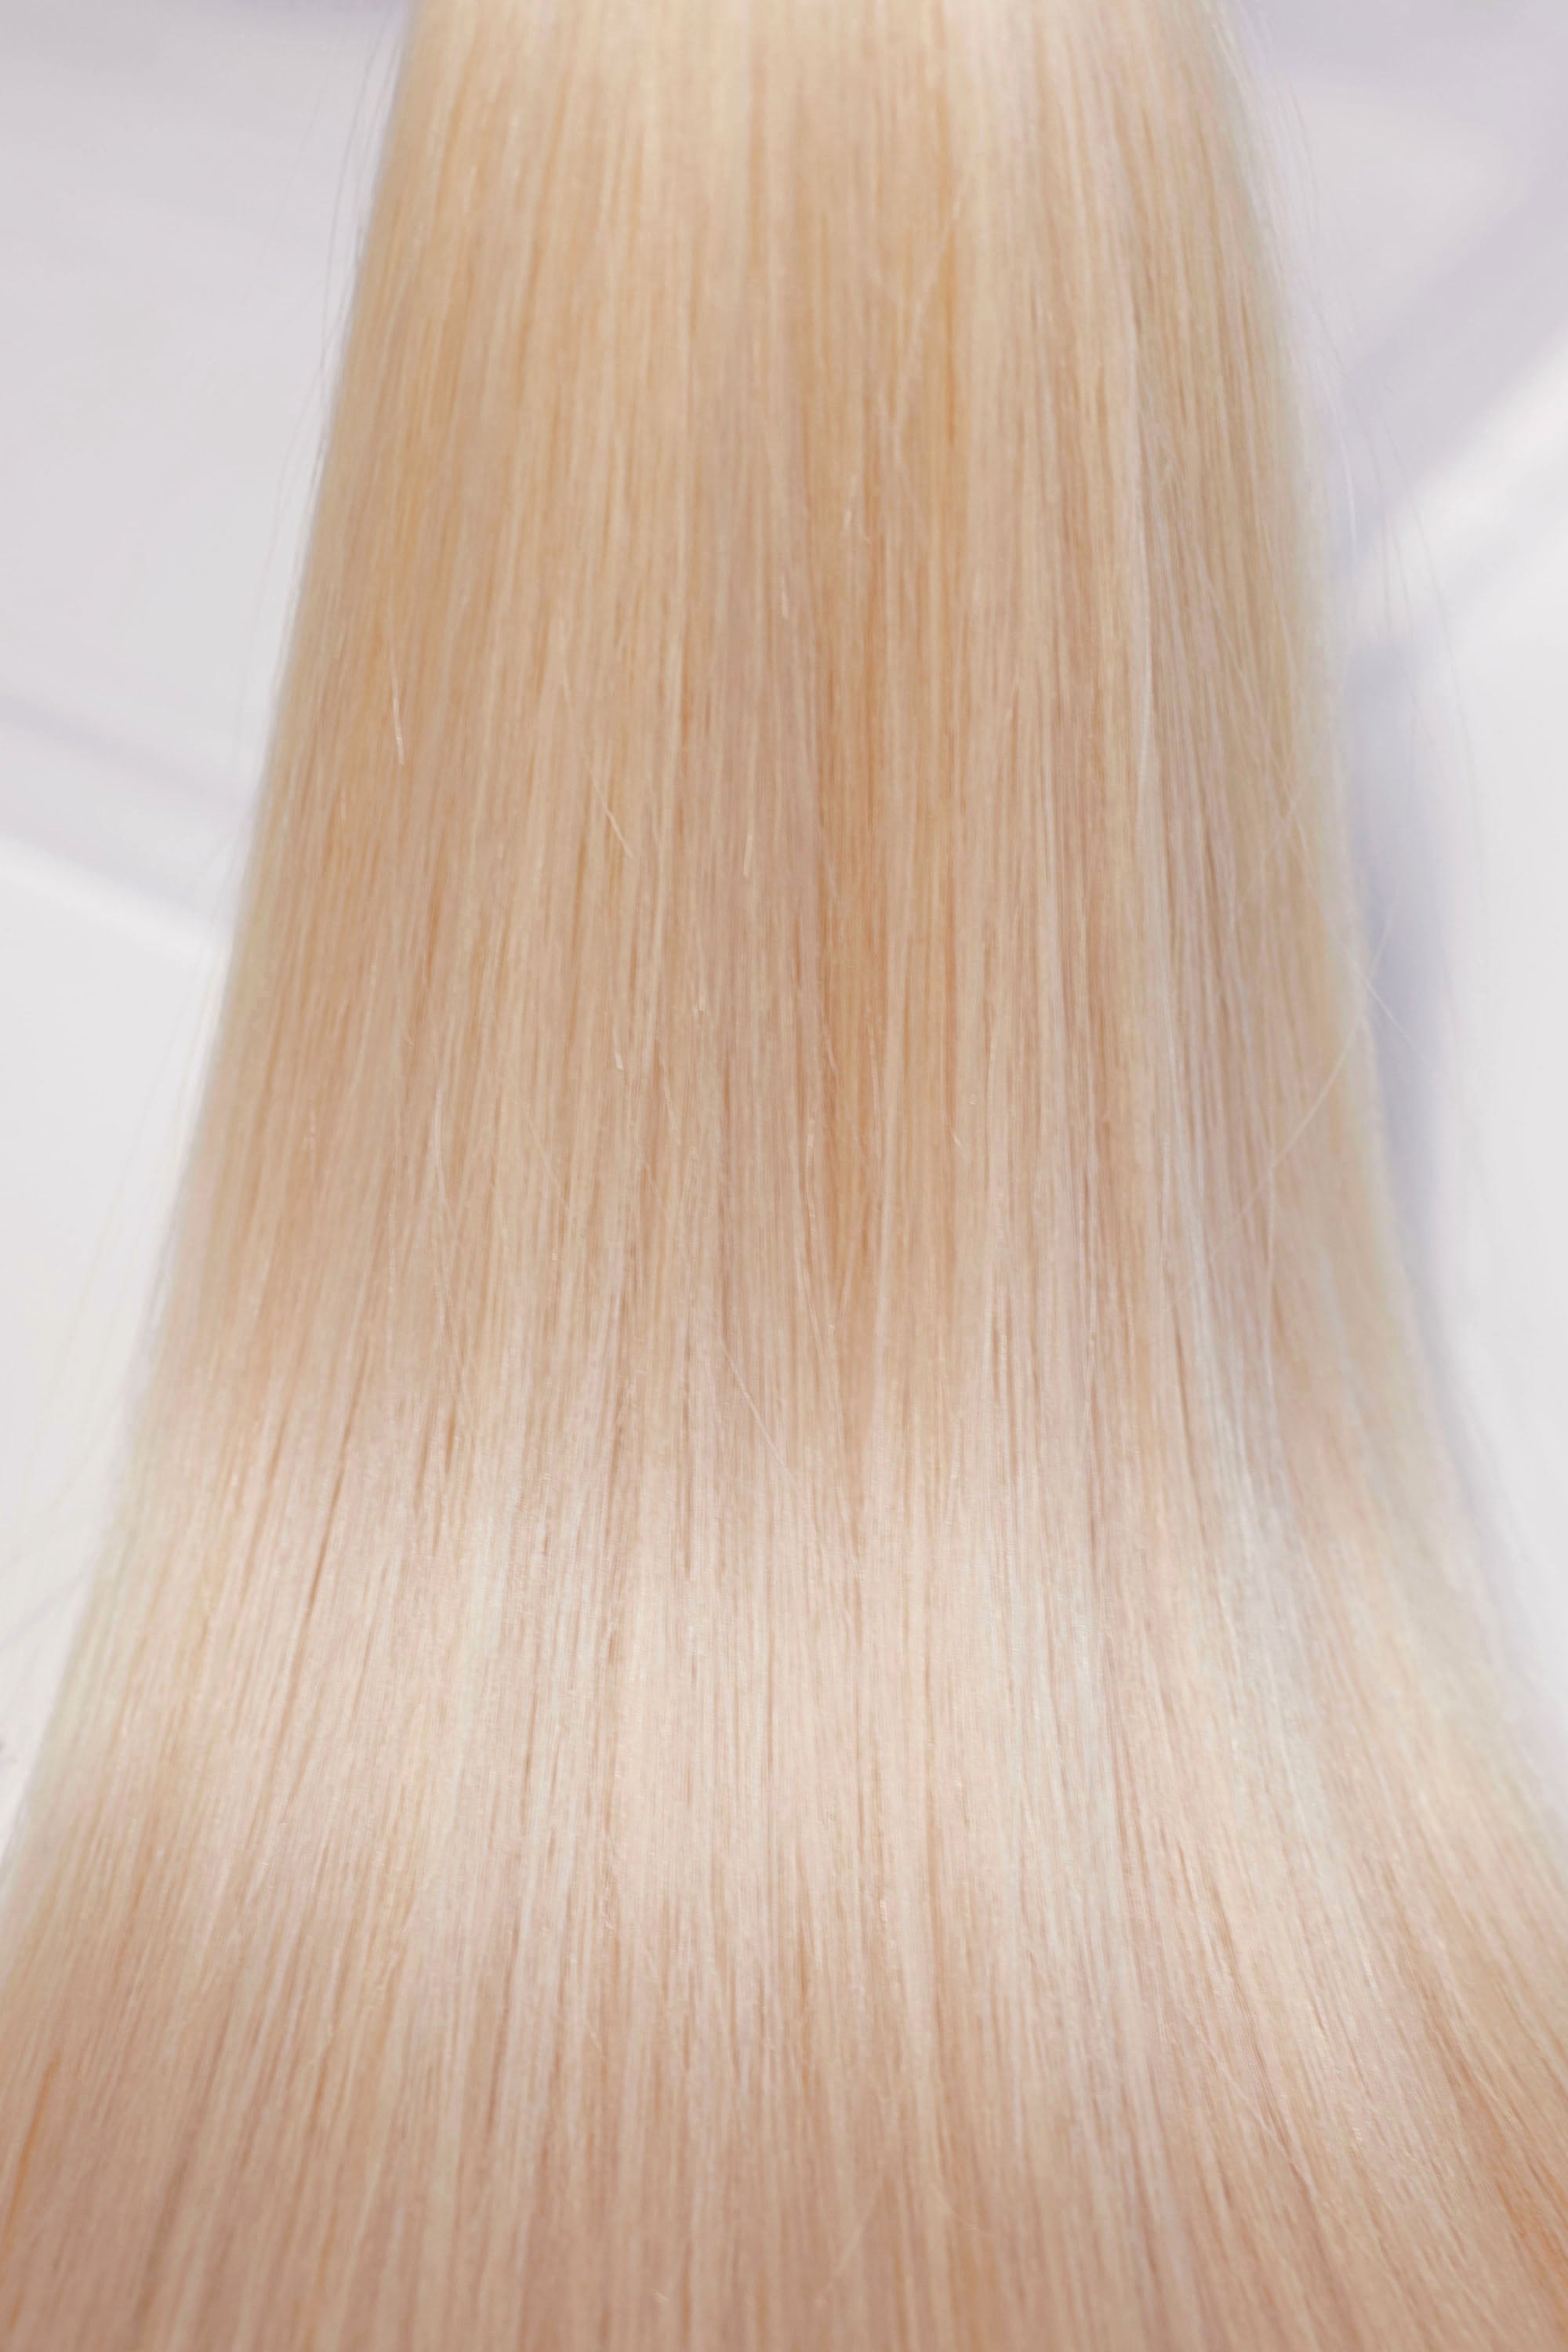 Behair professional Keratin Tip "Premium" 24" (60cm) Natural Straight Platinum Blond #60 - 25g (1g each pcs) hair extensions